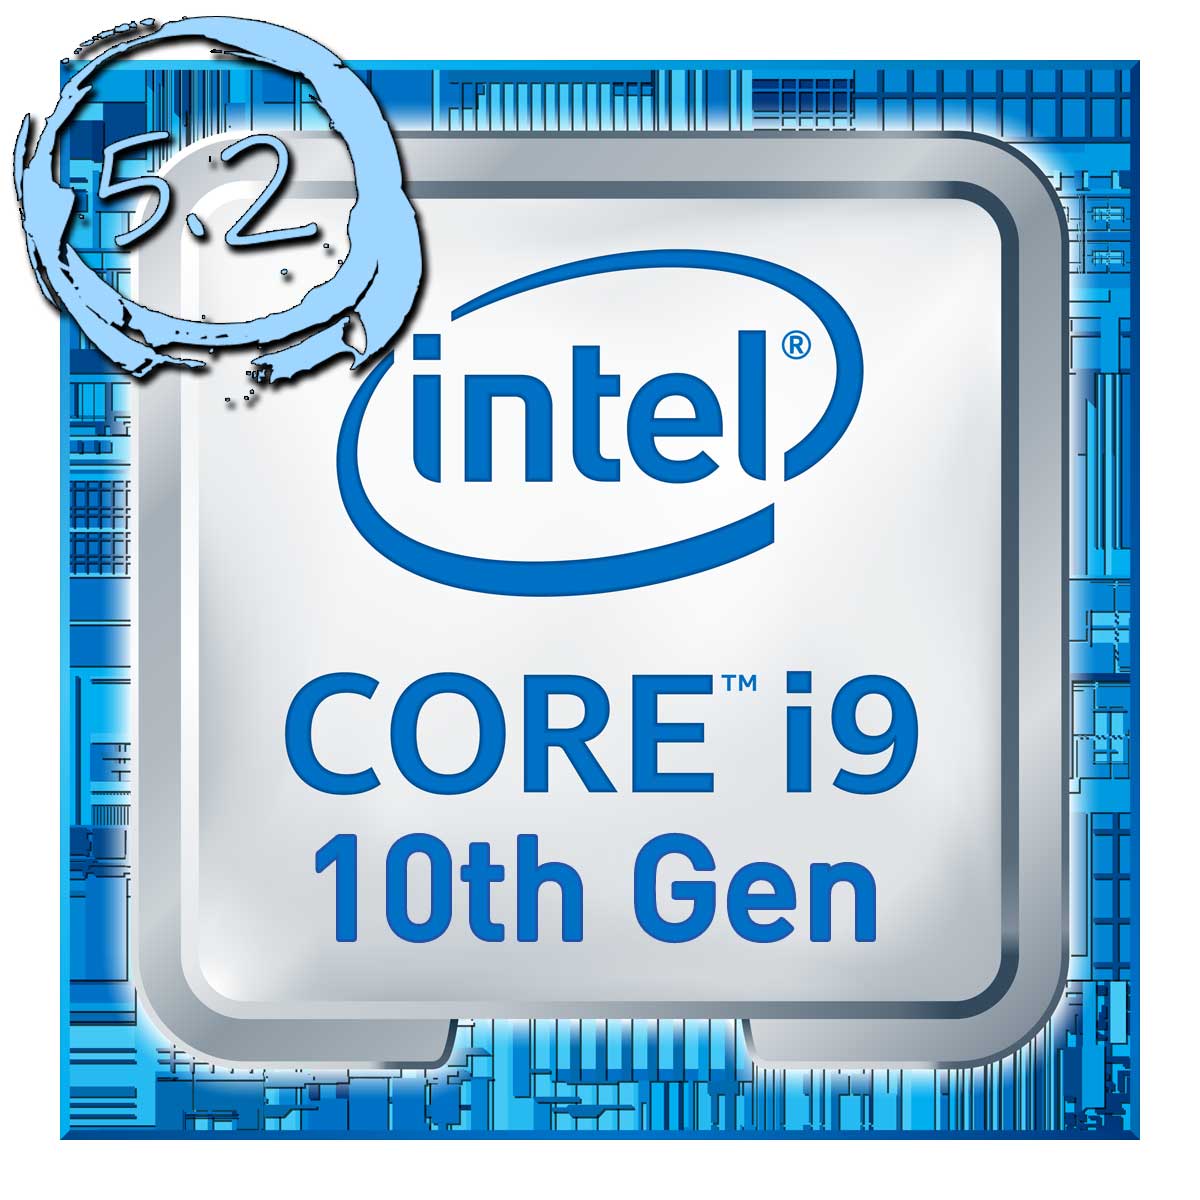 Intel Core i9-10900K Speed Binned 5.2GHz (Comet Lake) Socket LGA1151 Proces